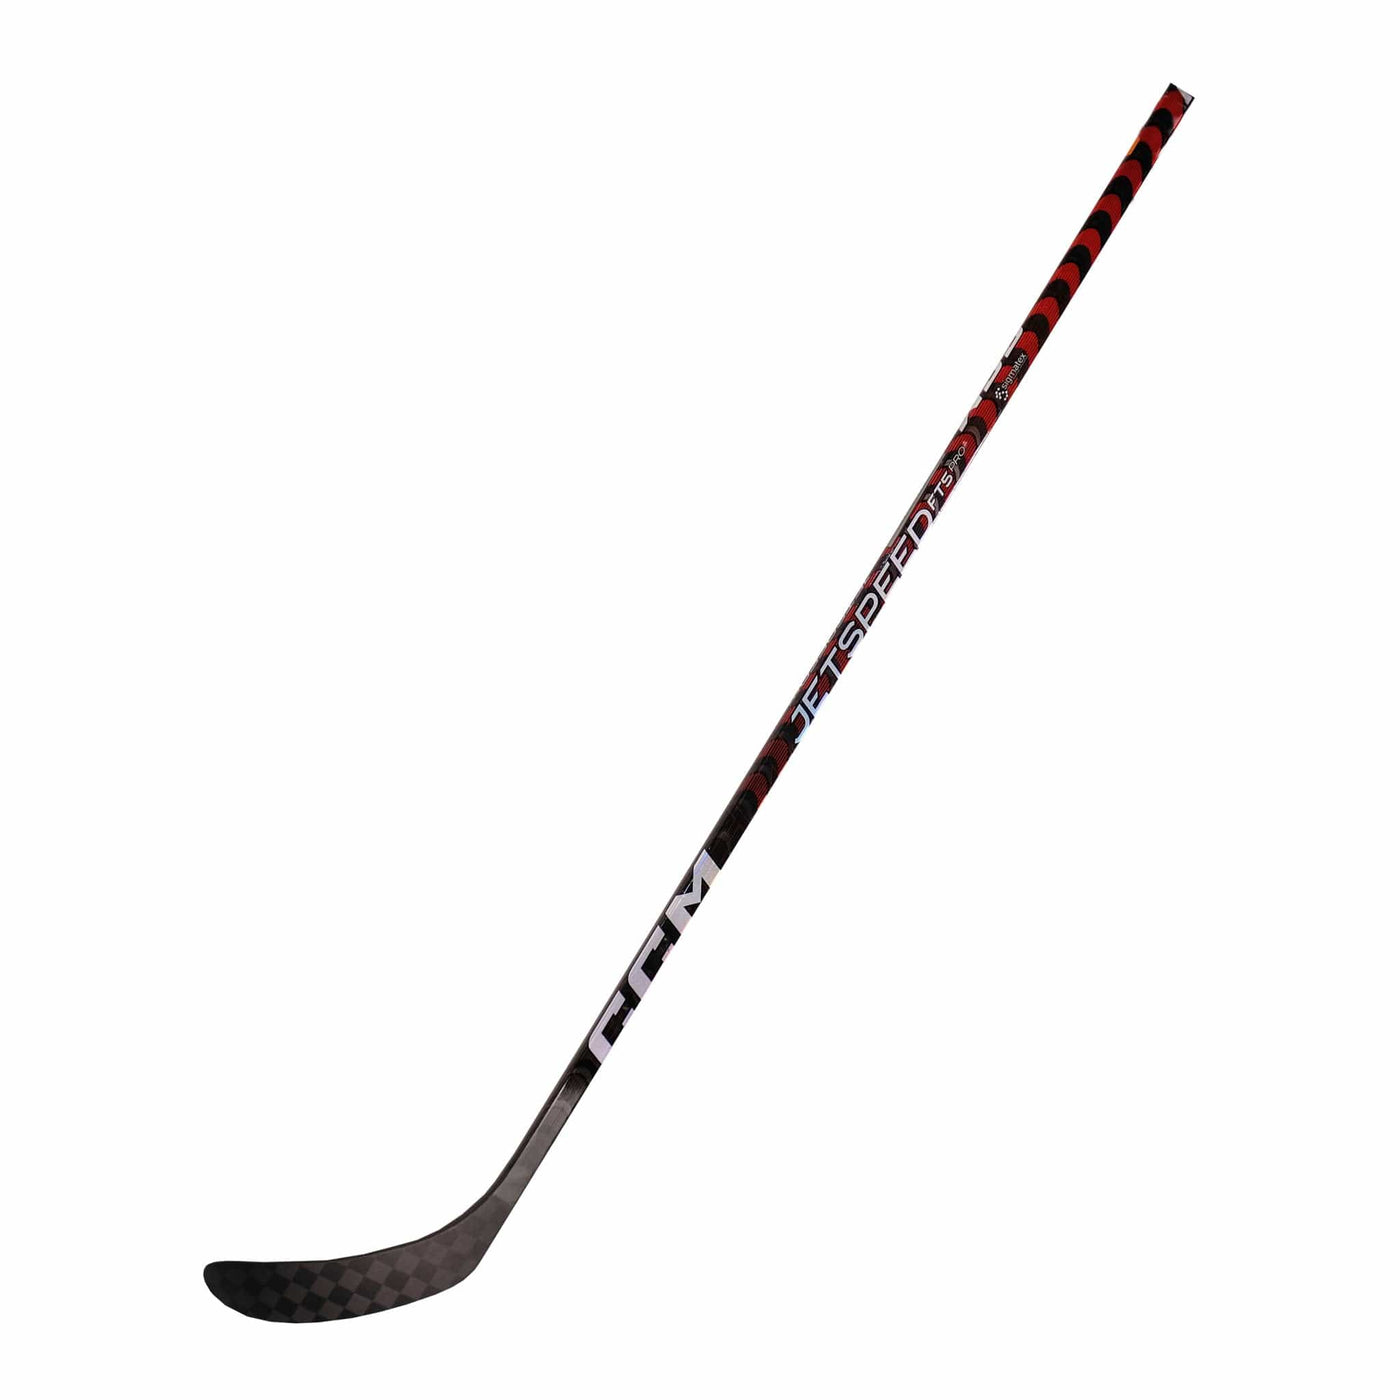 CCM Jetspeed FT5 Pro Youth Hockey Stick - The Hockey Shop Source For Sports